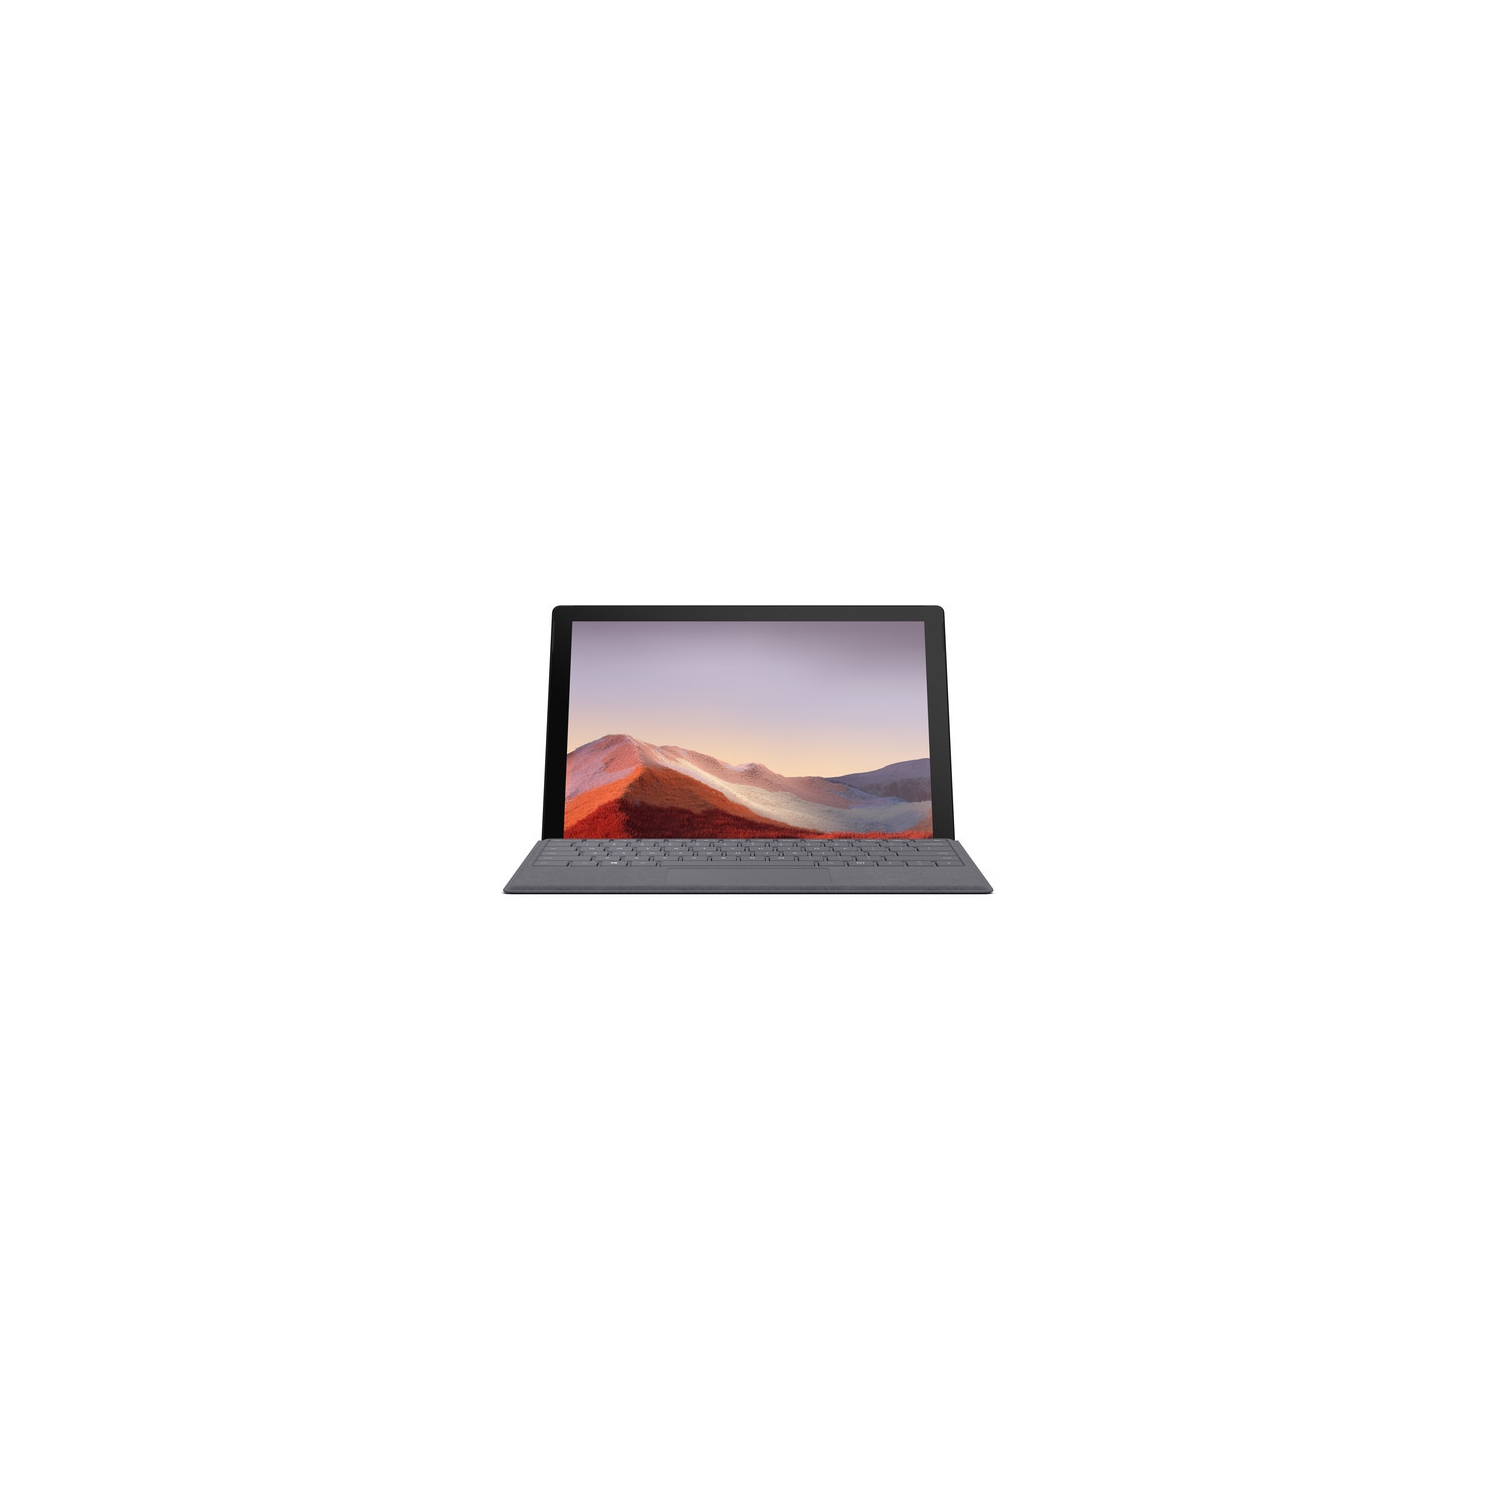 Microsoft Surface Pro 7 12.3" Windows 10 Tablet -Matte Black (Intel Core i5/8 GB RAM/ 256 GB/ Win 10 Home)- Manufacturer Factory Recertified - Open Box